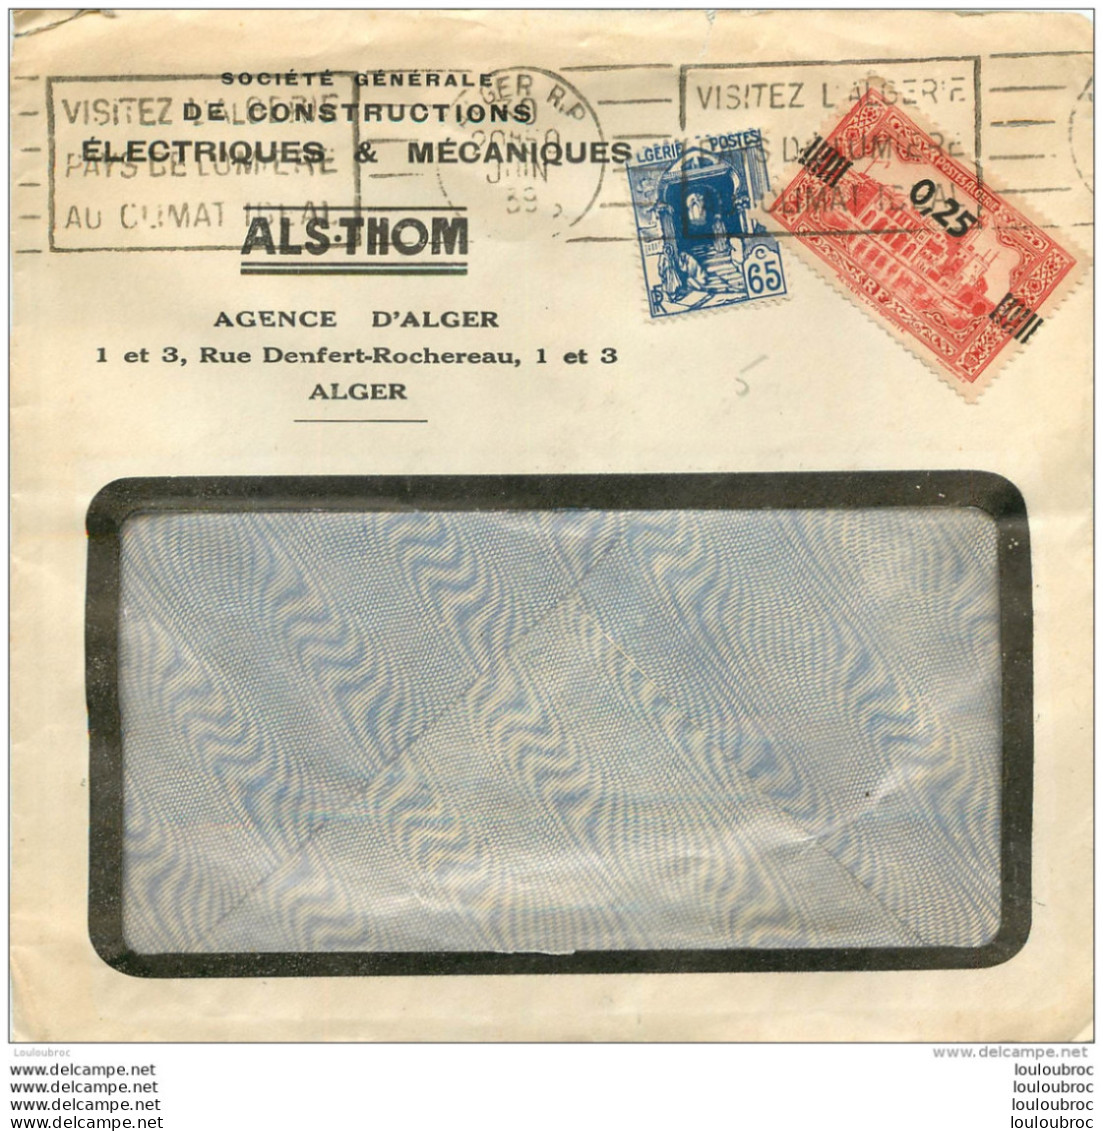 ENVELOPPE  1939 ALS.THOM AGENCE D'ALGER - Gebruikt